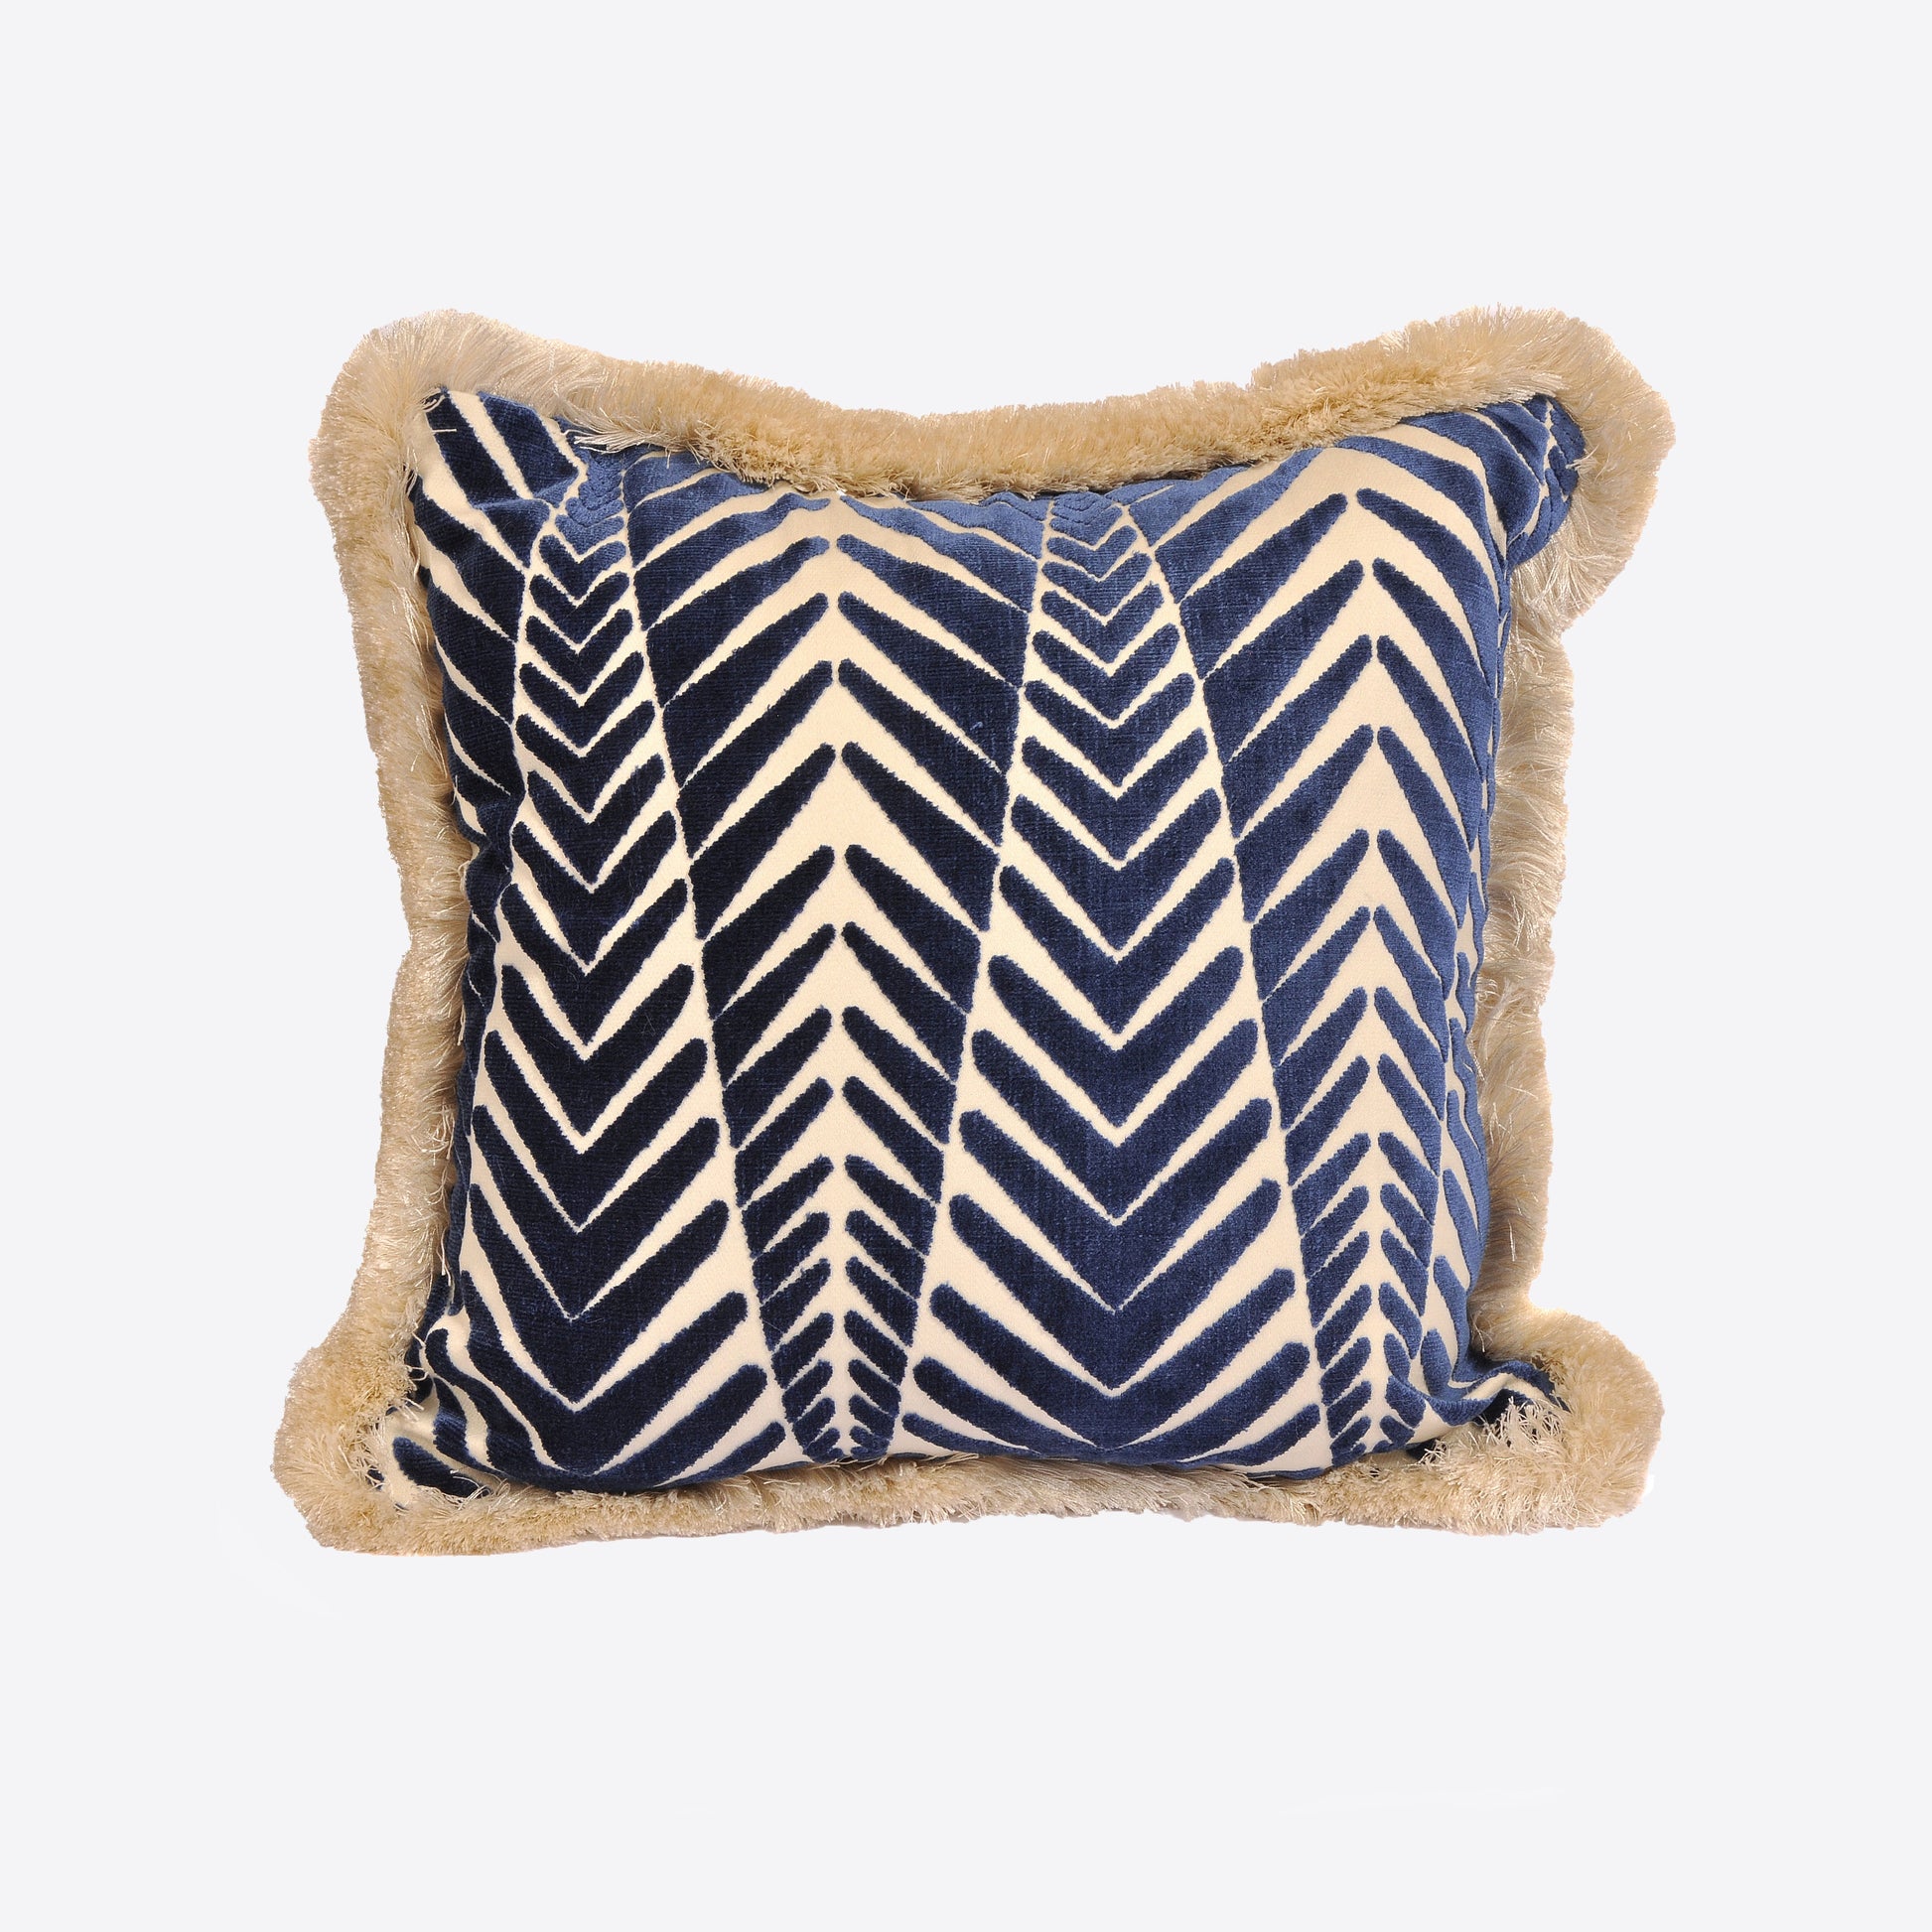 Navy and cream zig zag patterned cushion with tasseled edges